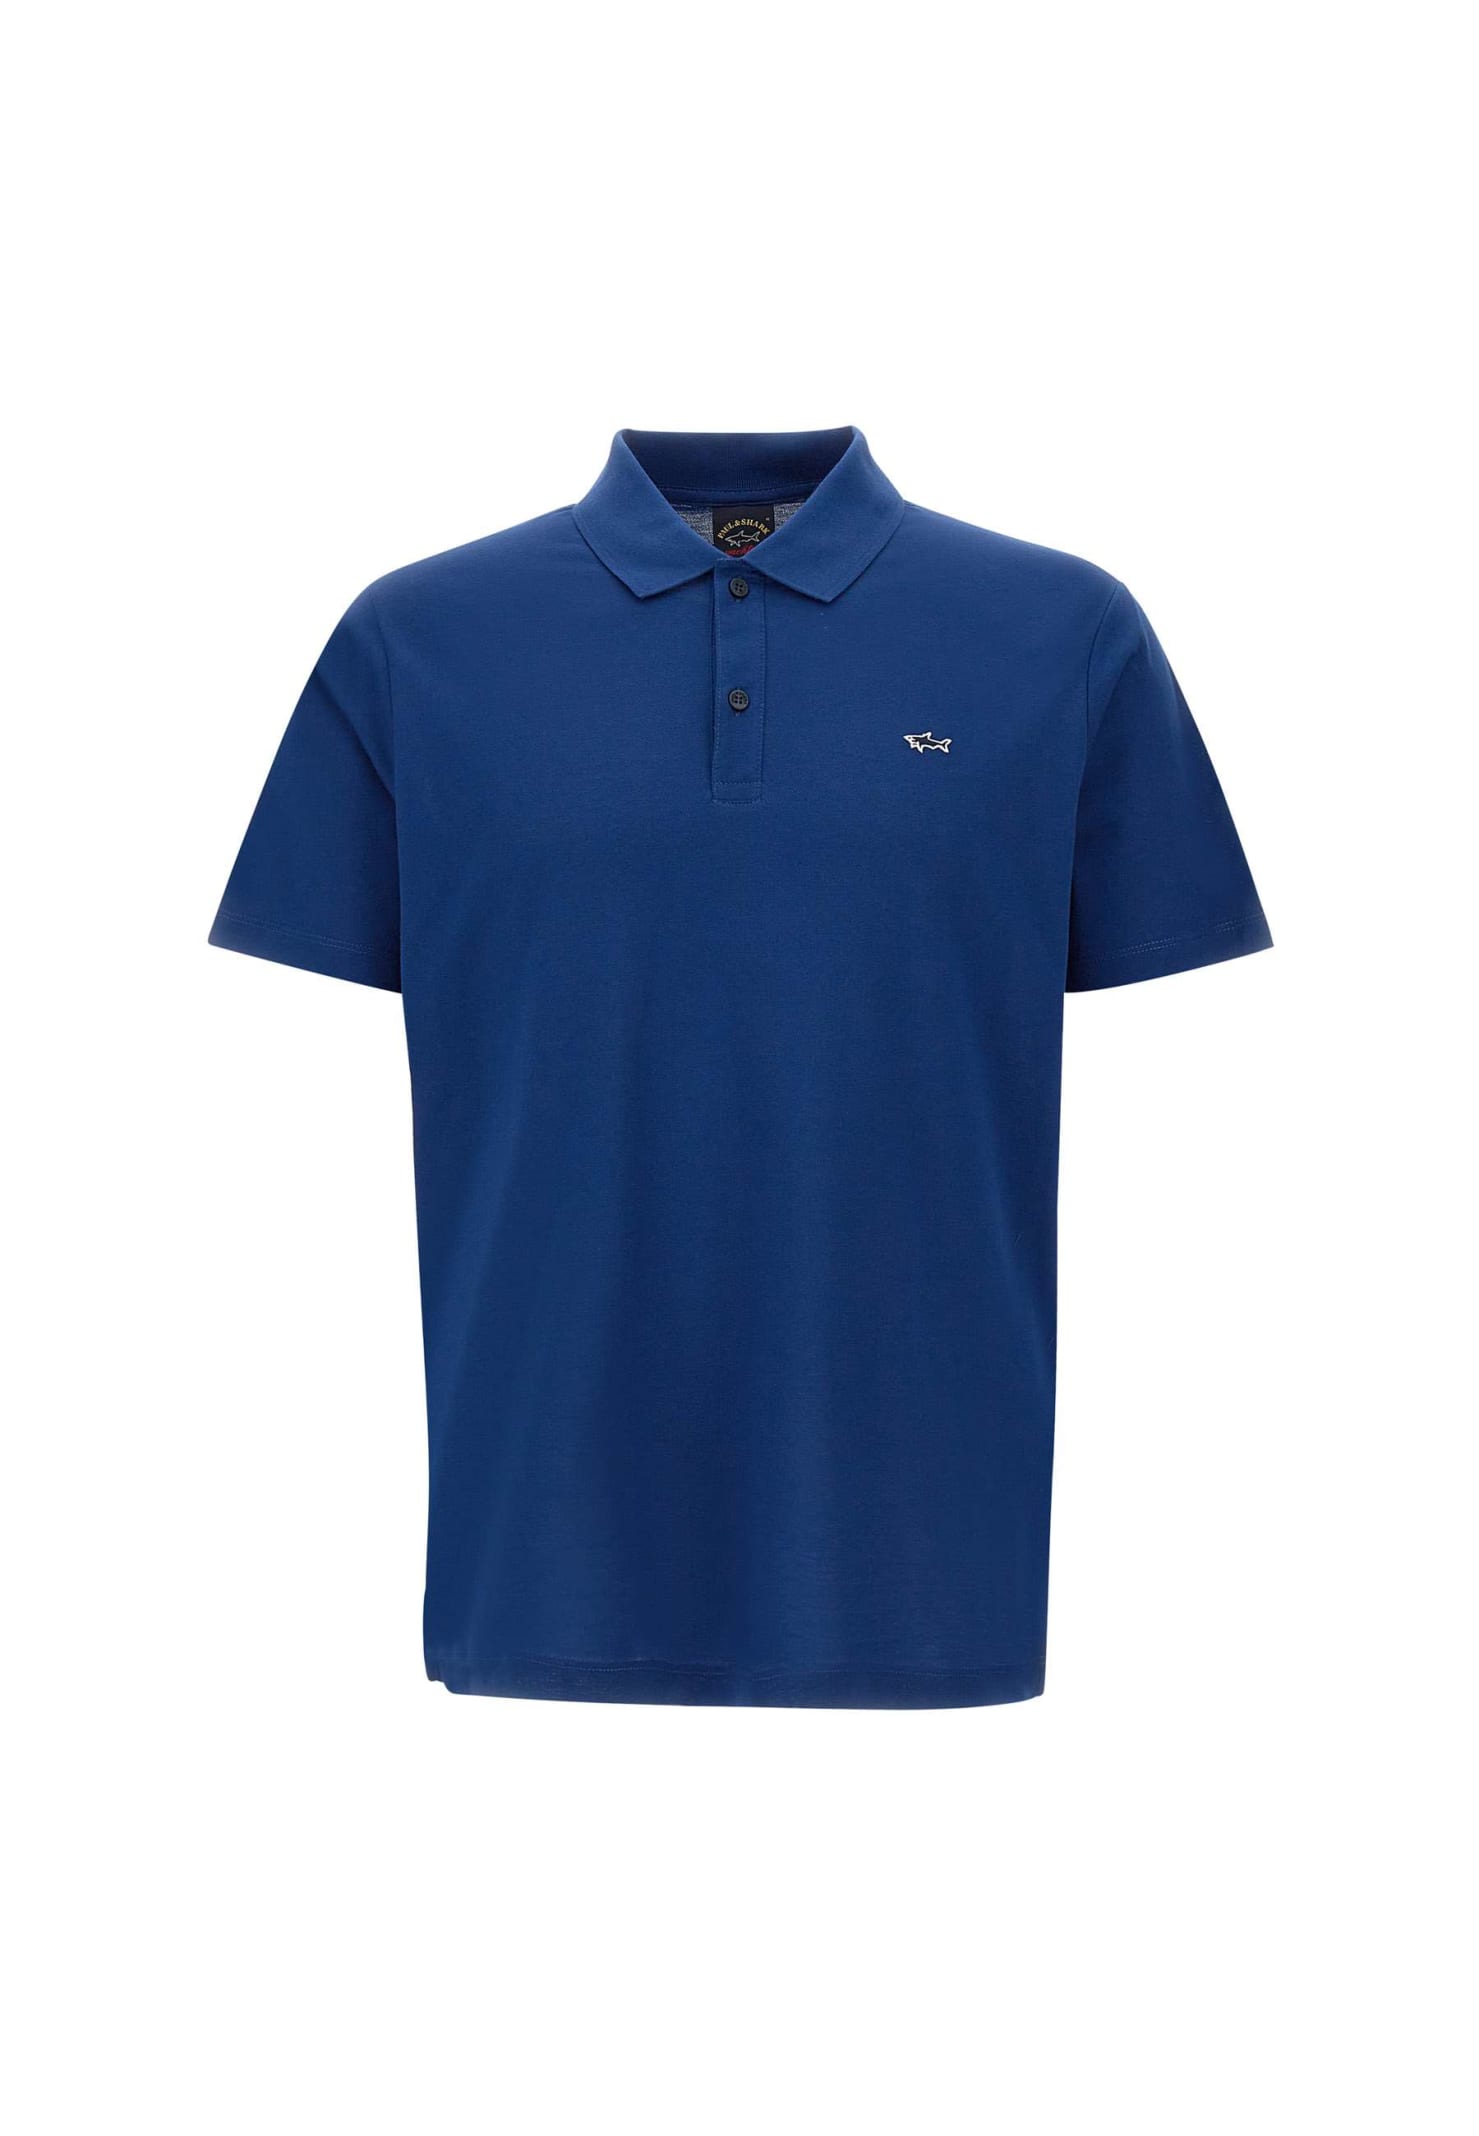 Paul&amp;shark Cotton Polo Shirt In Blue